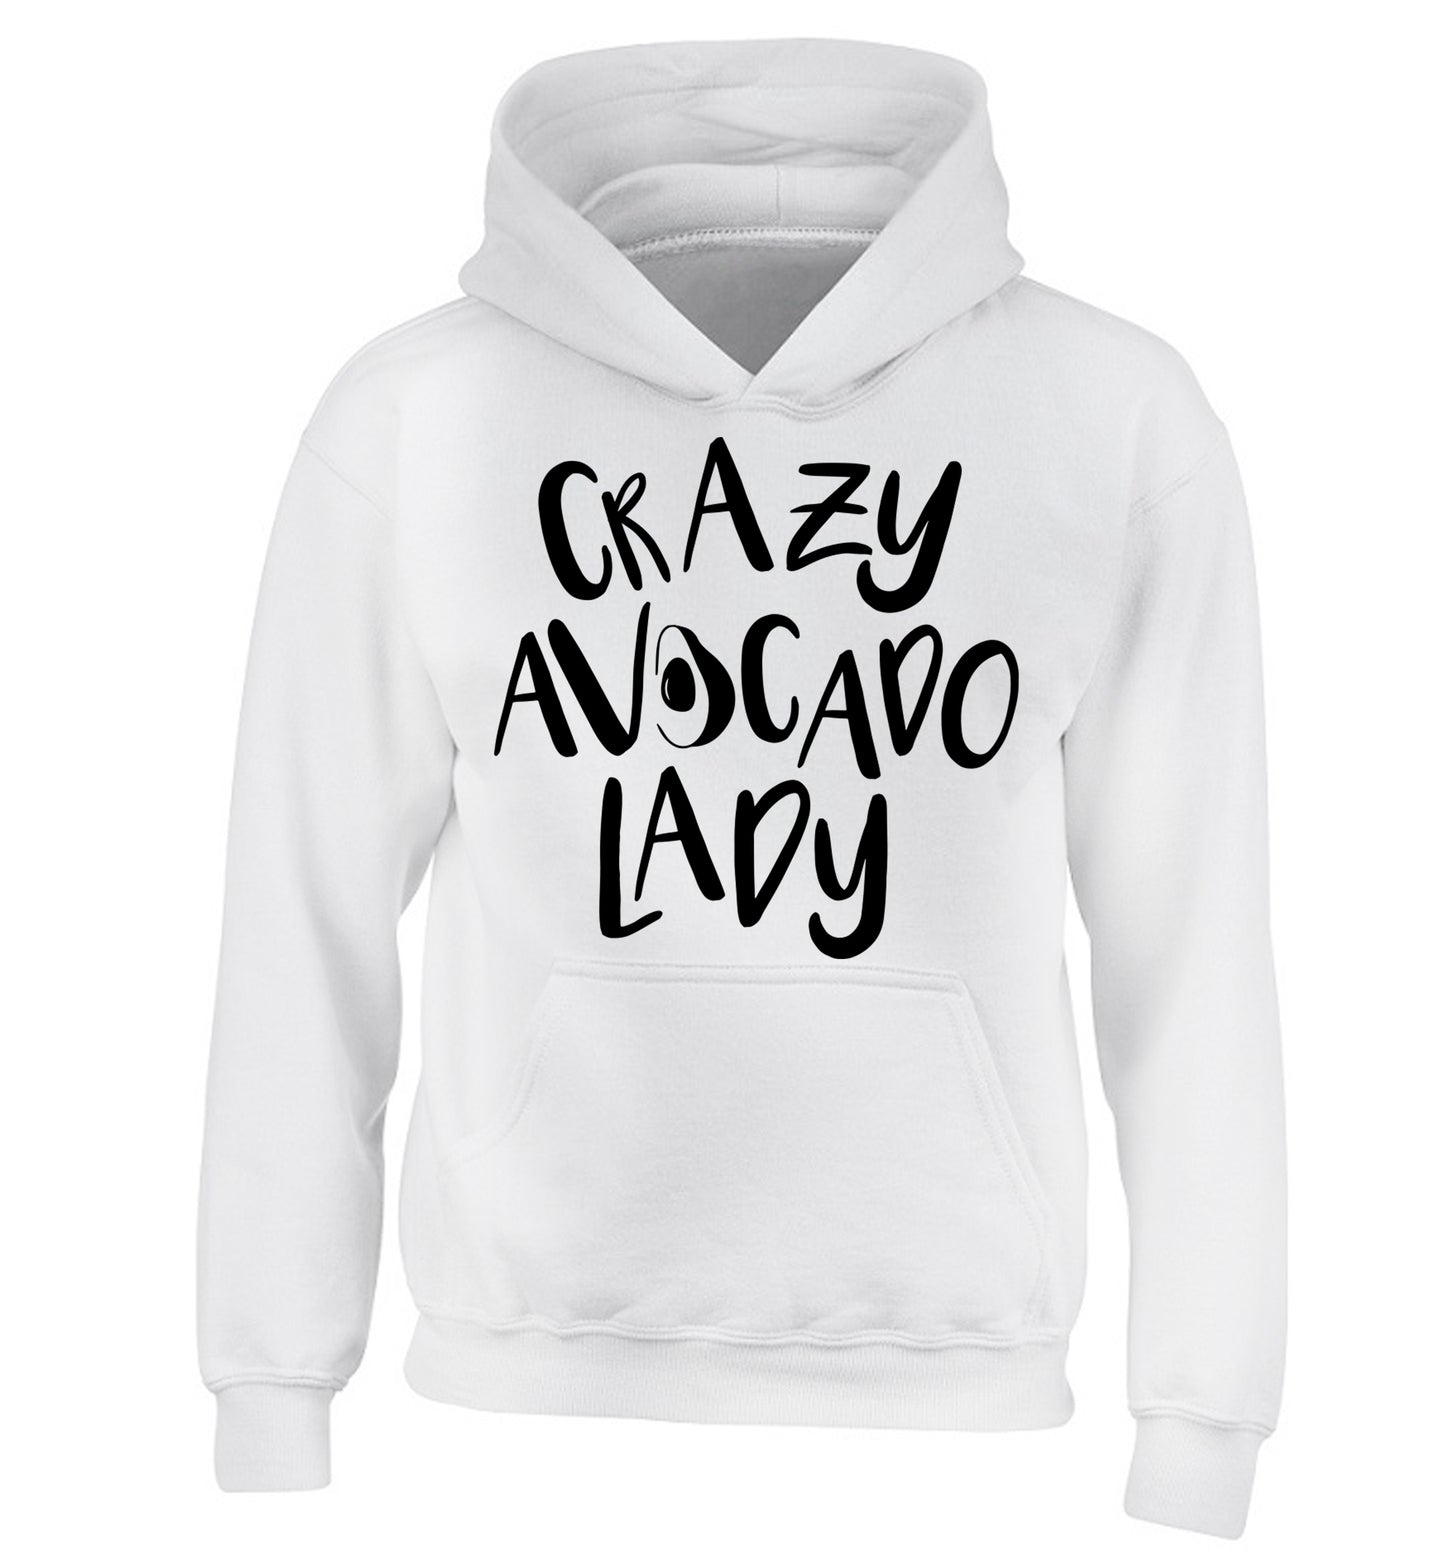 Crazy avocado lady children's white hoodie 12-14 Years